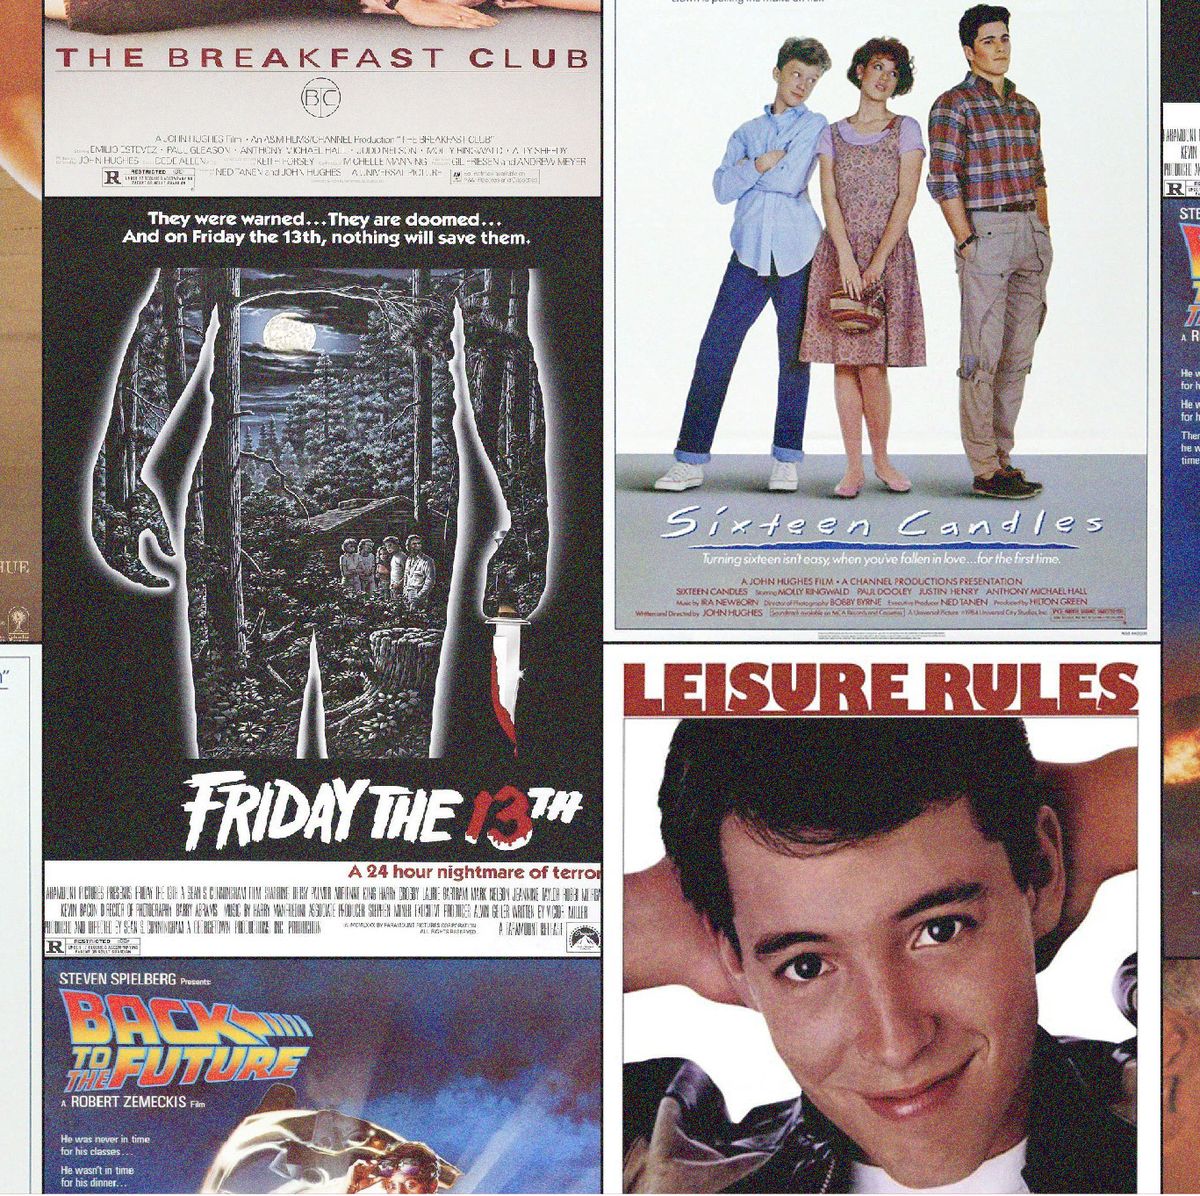 RETRO FASHION: '80s teens and their billion-dollar brand obsession 